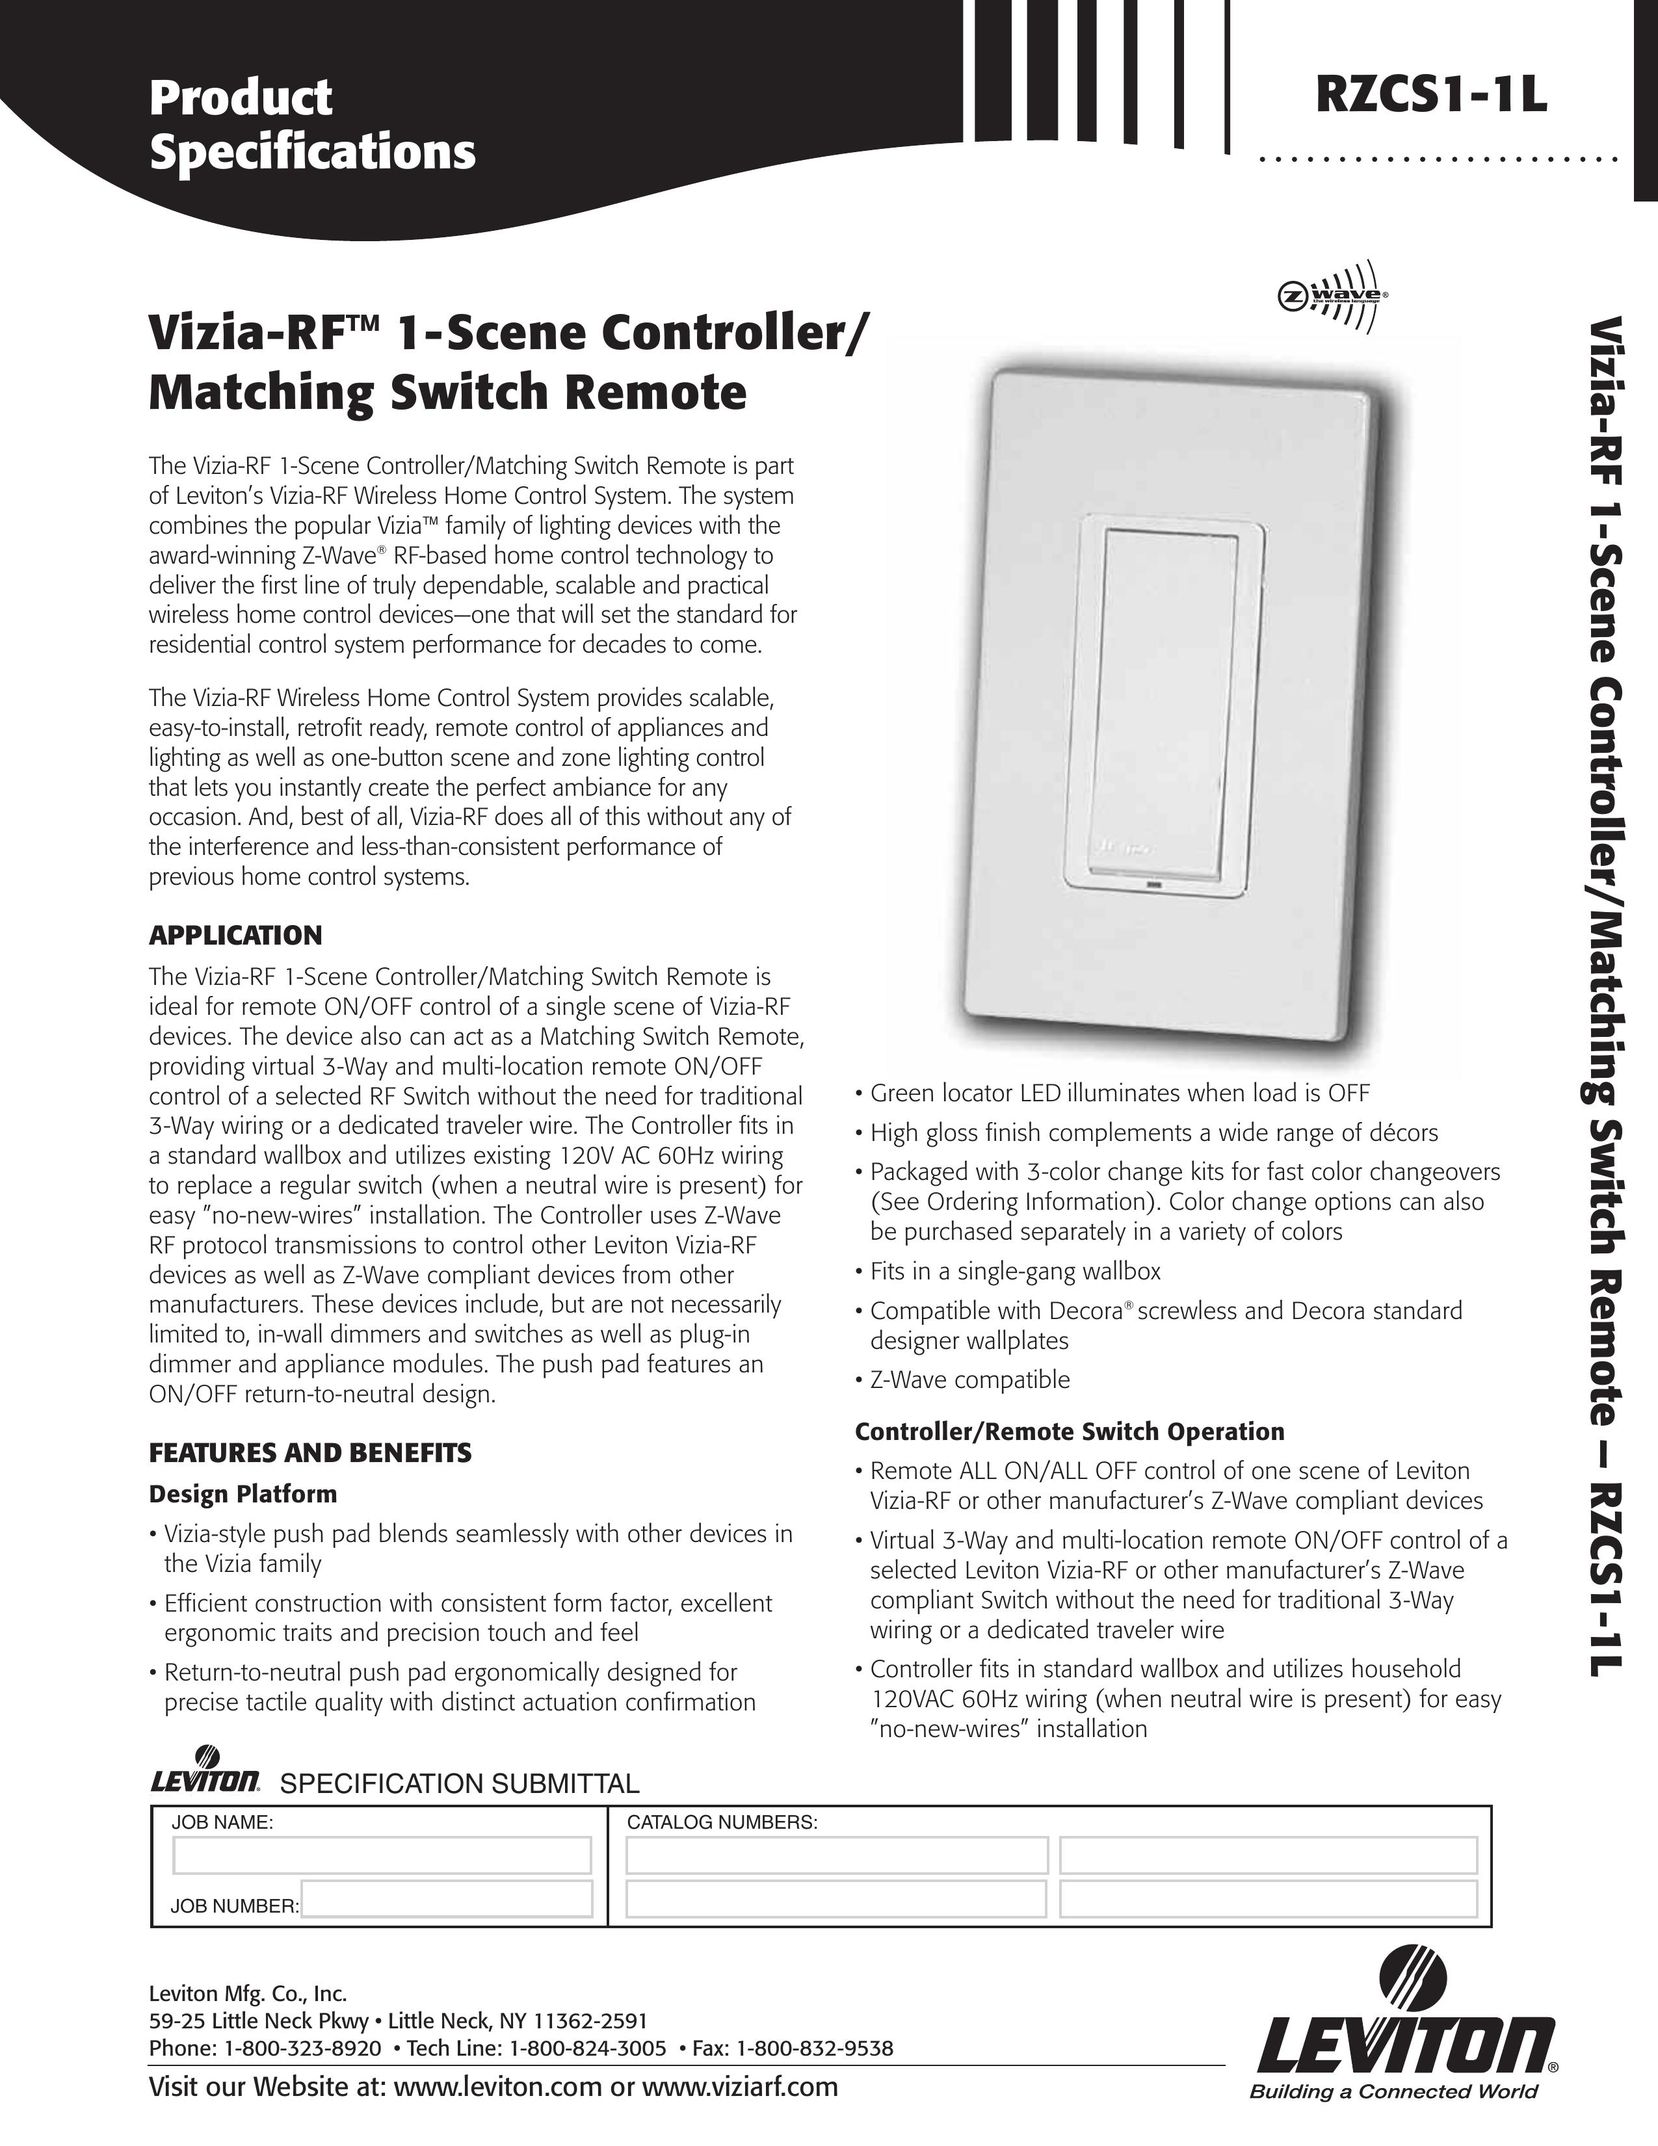 HomeTech Vizia-RF Switch User Manual